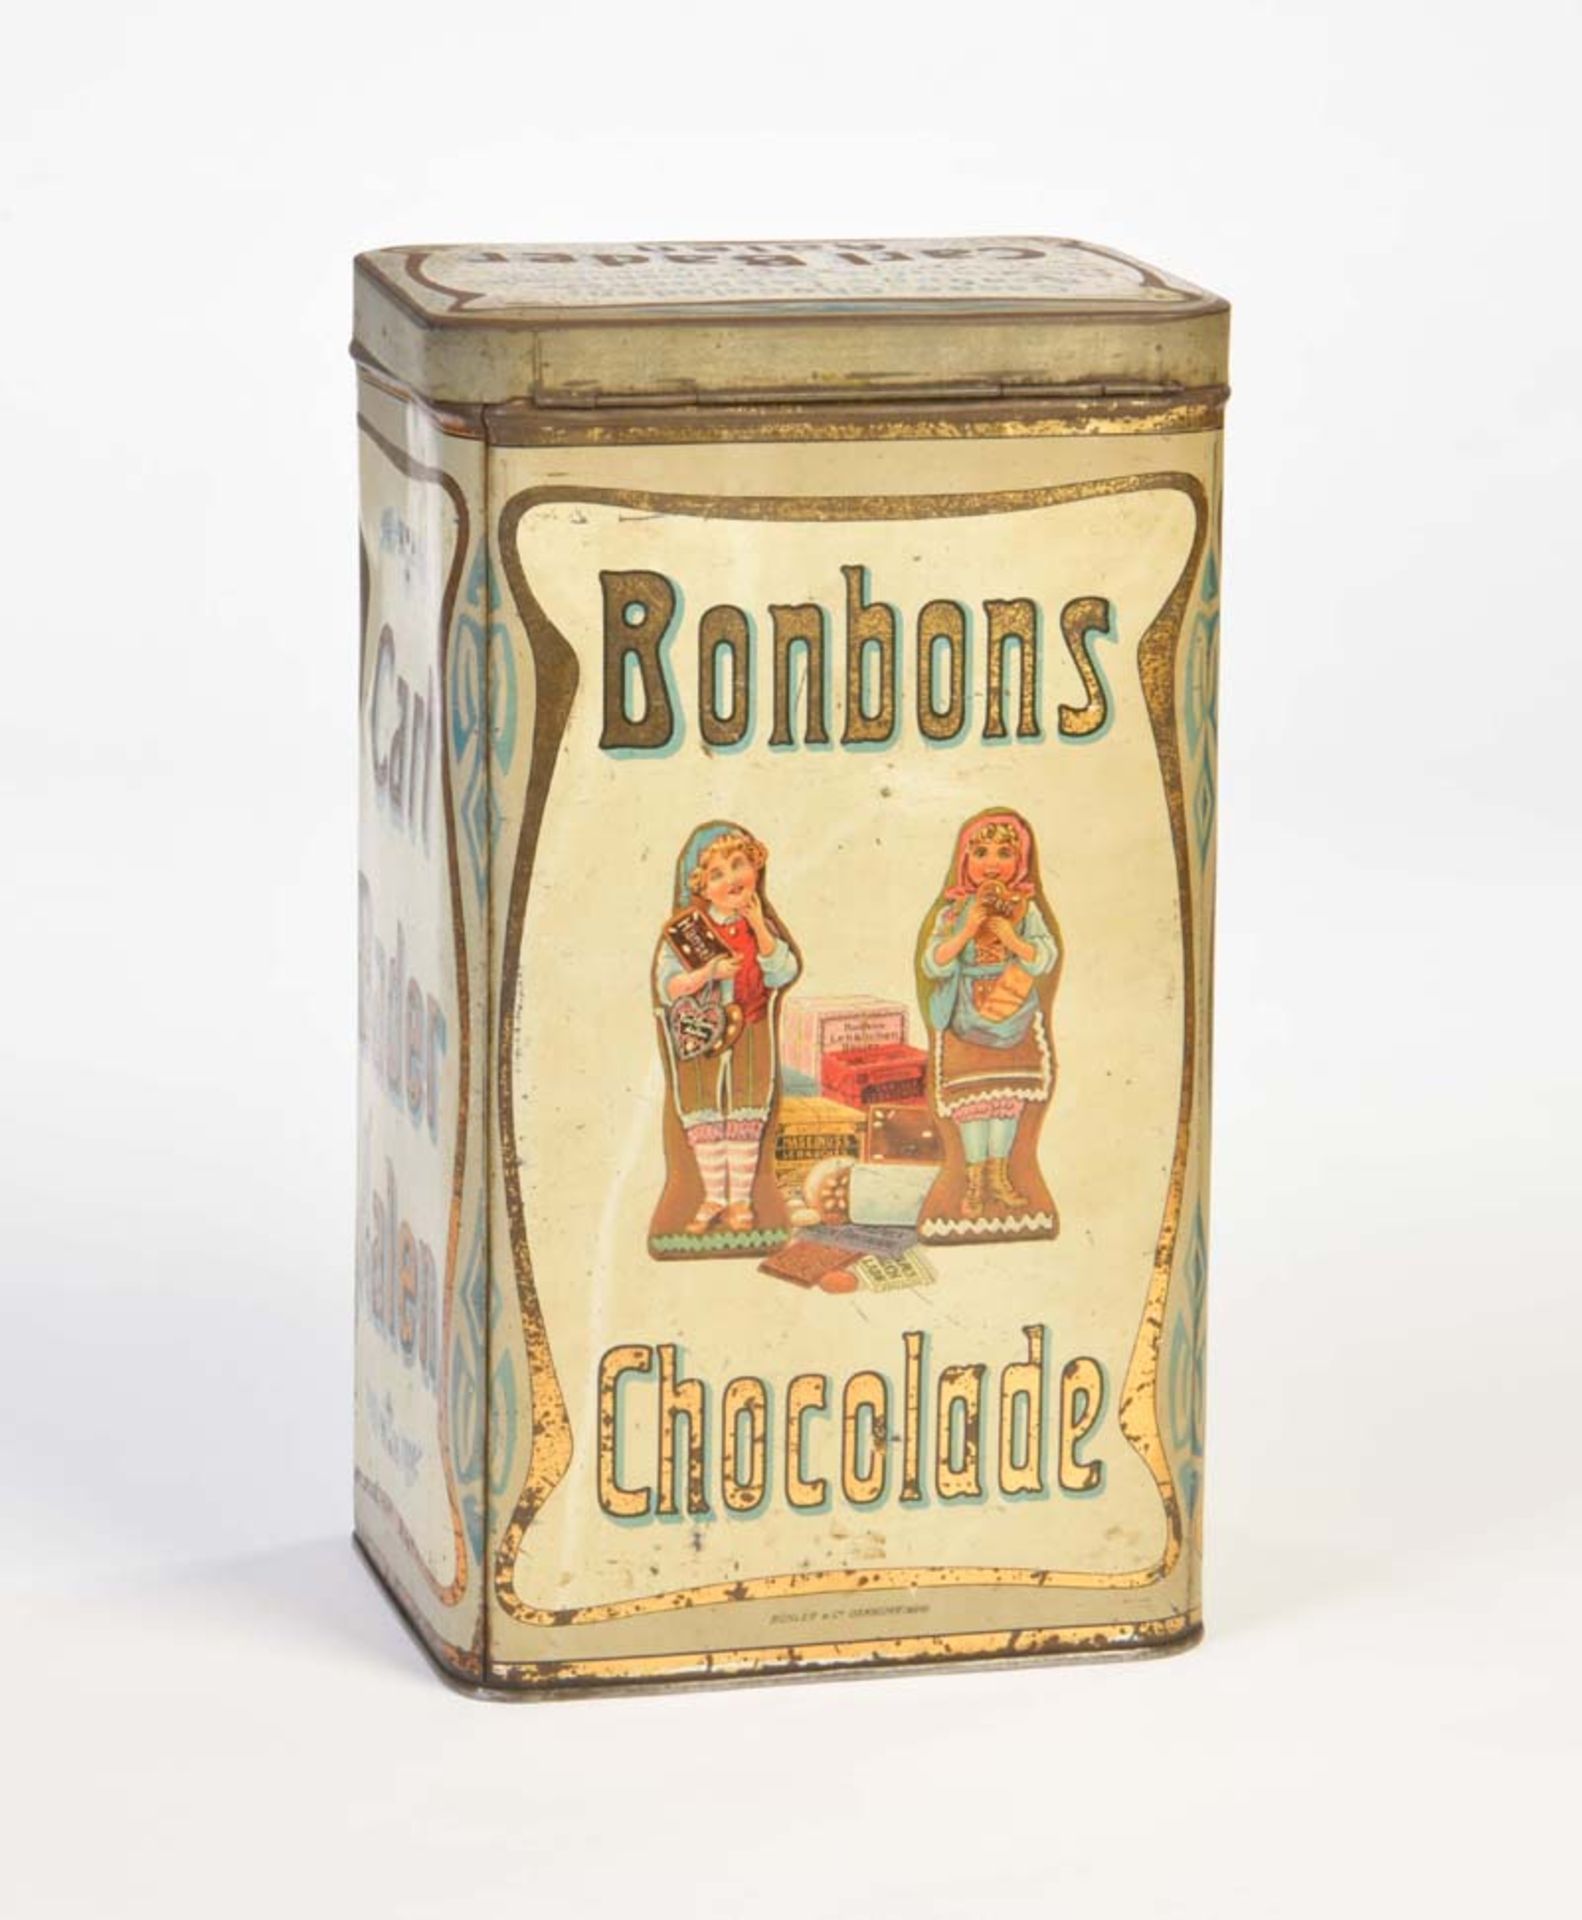 Blechdose "Bonbons Chocolade" Carl Bader Aalen, Germany VK, 31 cm, min. LM, Z 2Tin Can "Bonbons